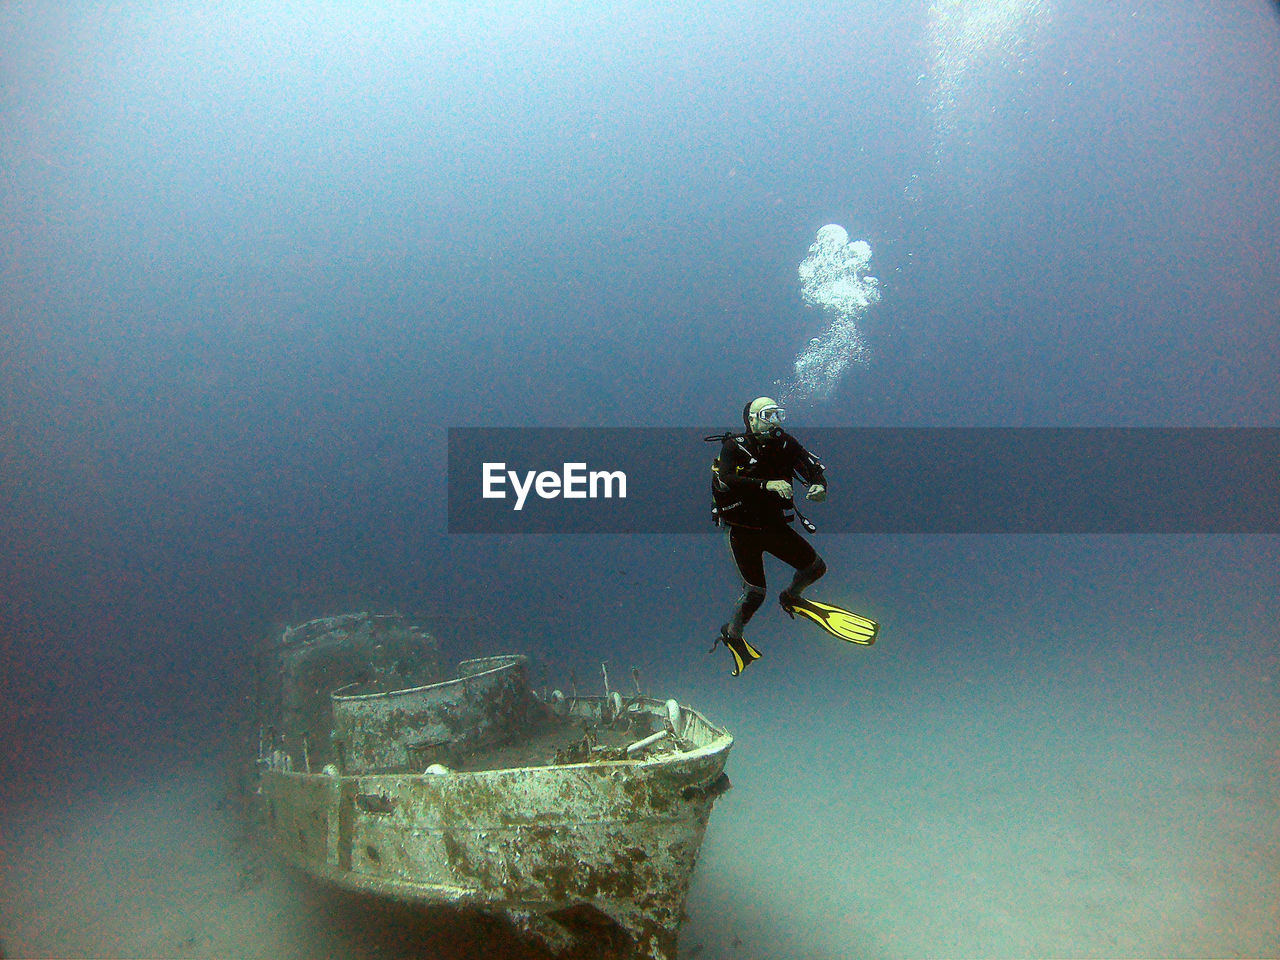 A diver dives next to the wreck.antalya kaş turkey